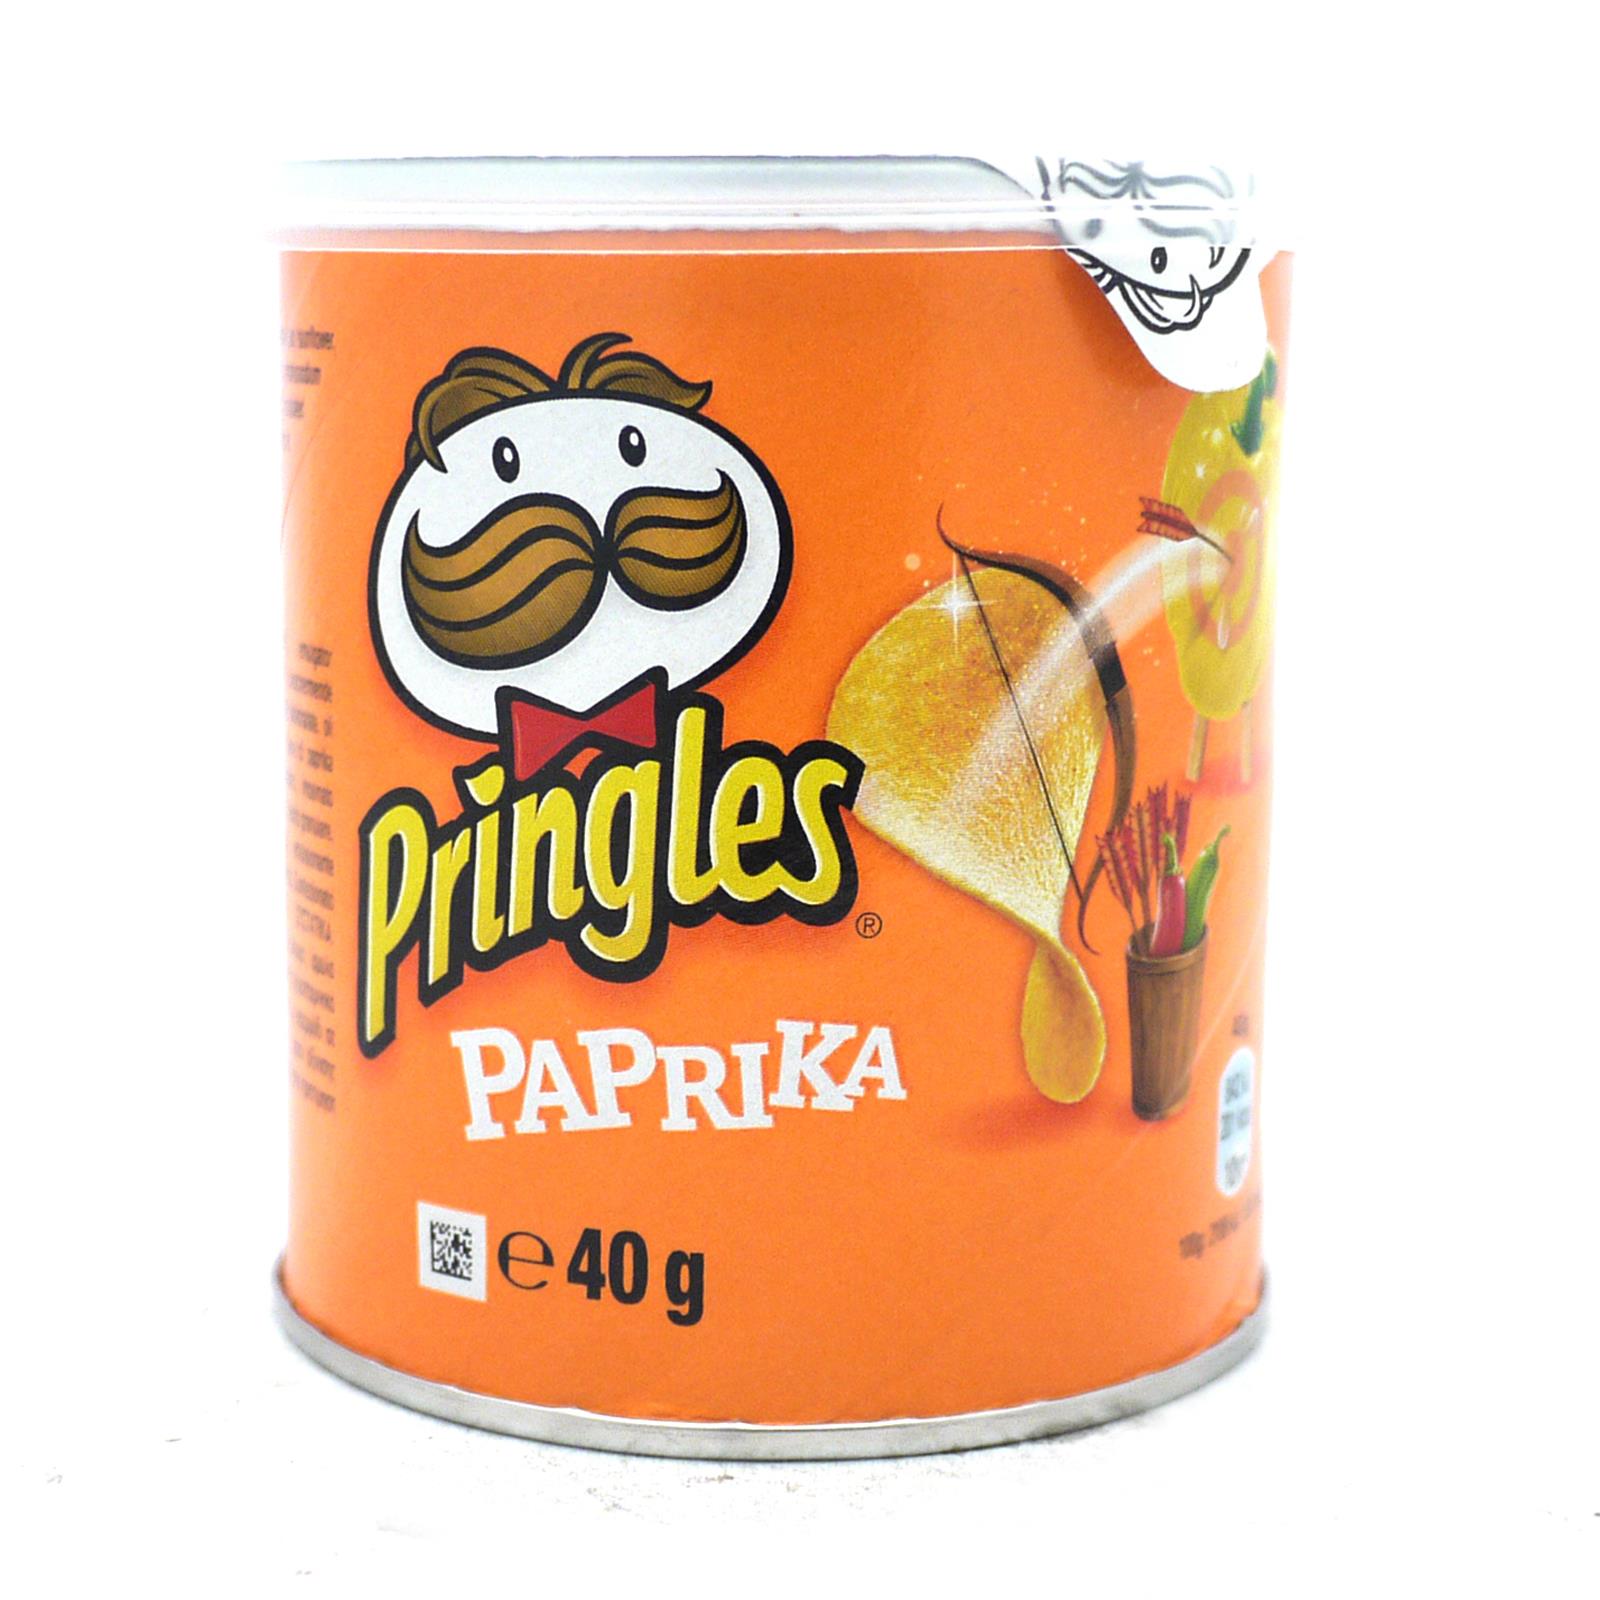 Pringles Paprika Flavour Potato Chips, 40 g, Pack of 12 - Bulkco